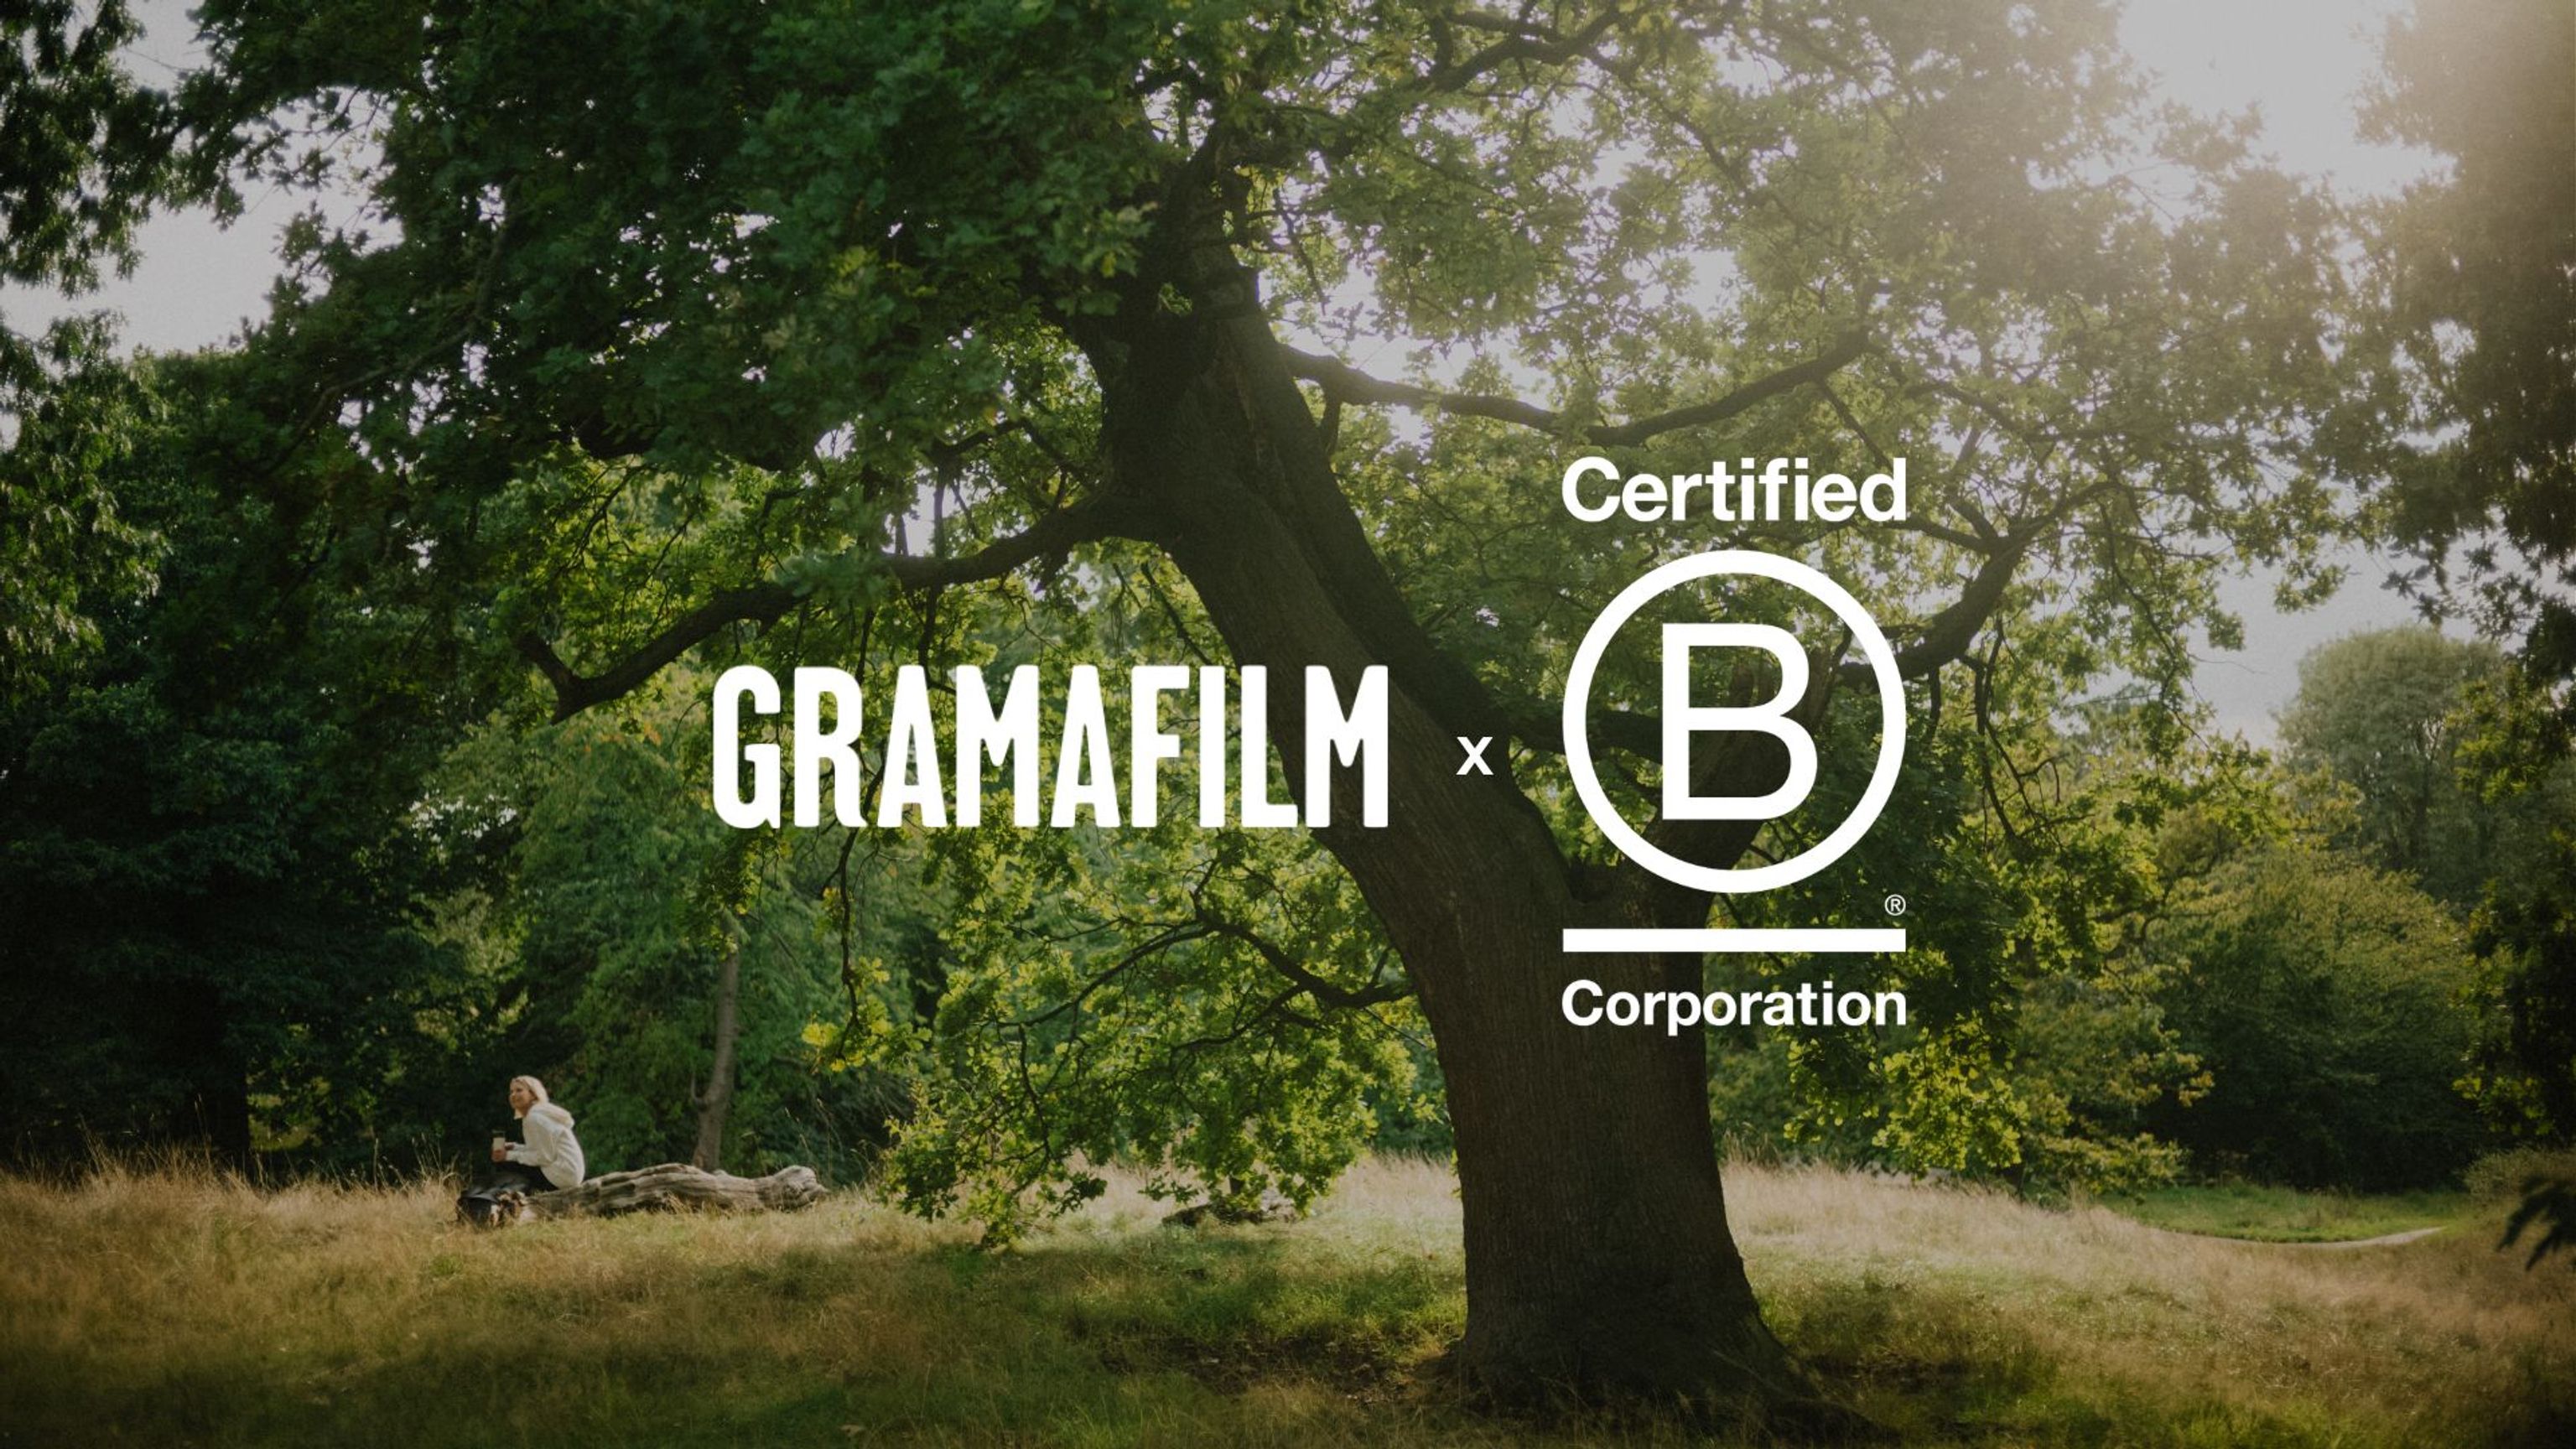 Gramafilm - Gramafilm Officially Certified as B Corp